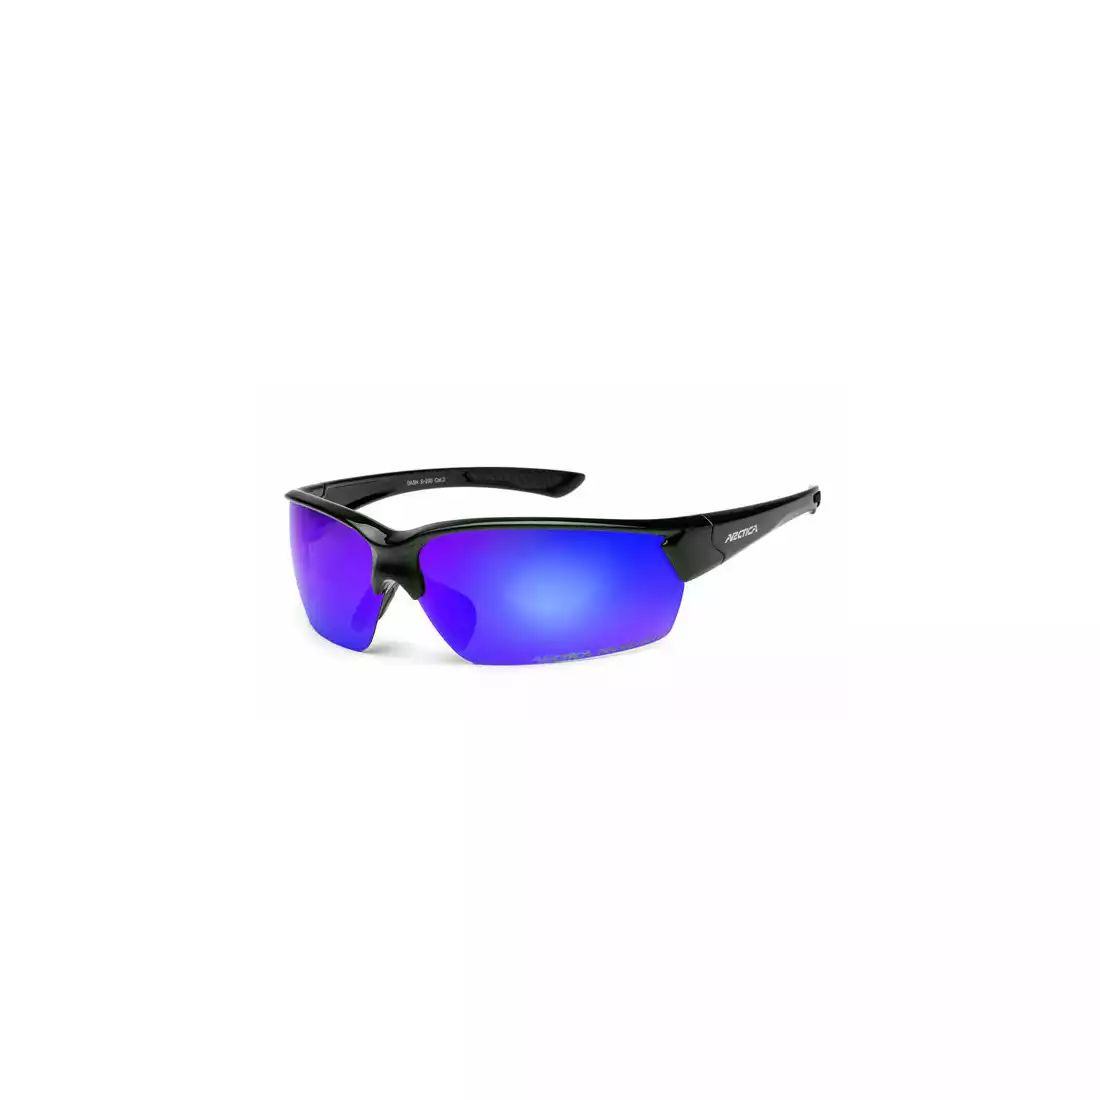 ARCTICA okulary rowerowe / sportowe, S 200D